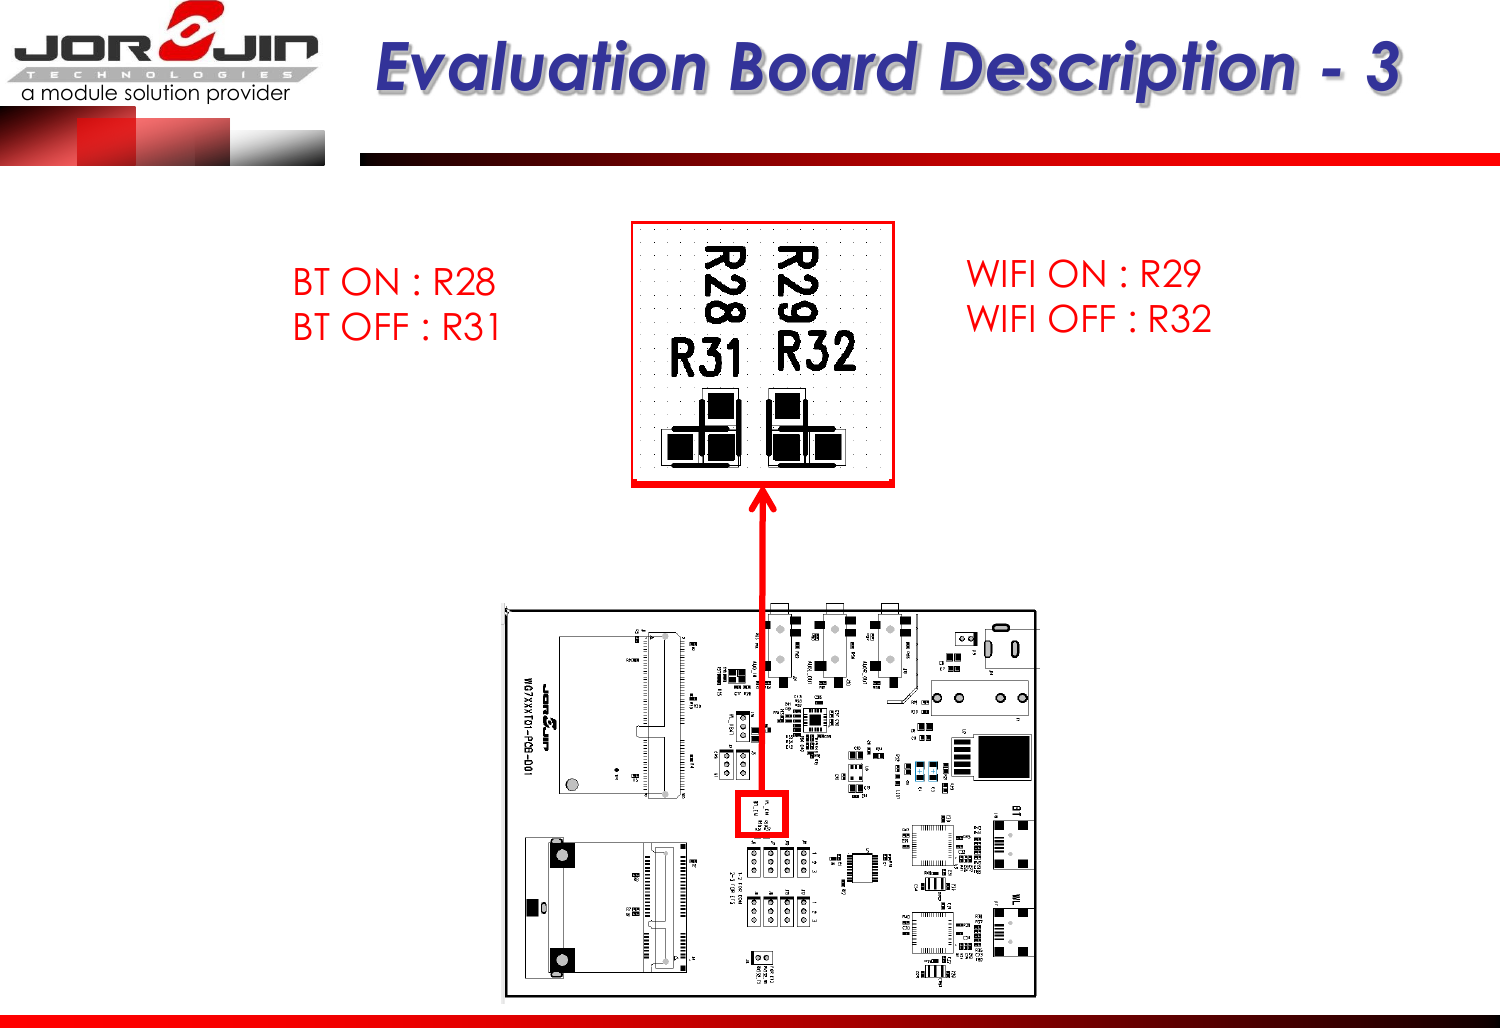 a module solution provider  Evaluation Board Description - 3 BT ON : R28  BT OFF : R31  WIFI ON : R29  WIFI OFF : R32 